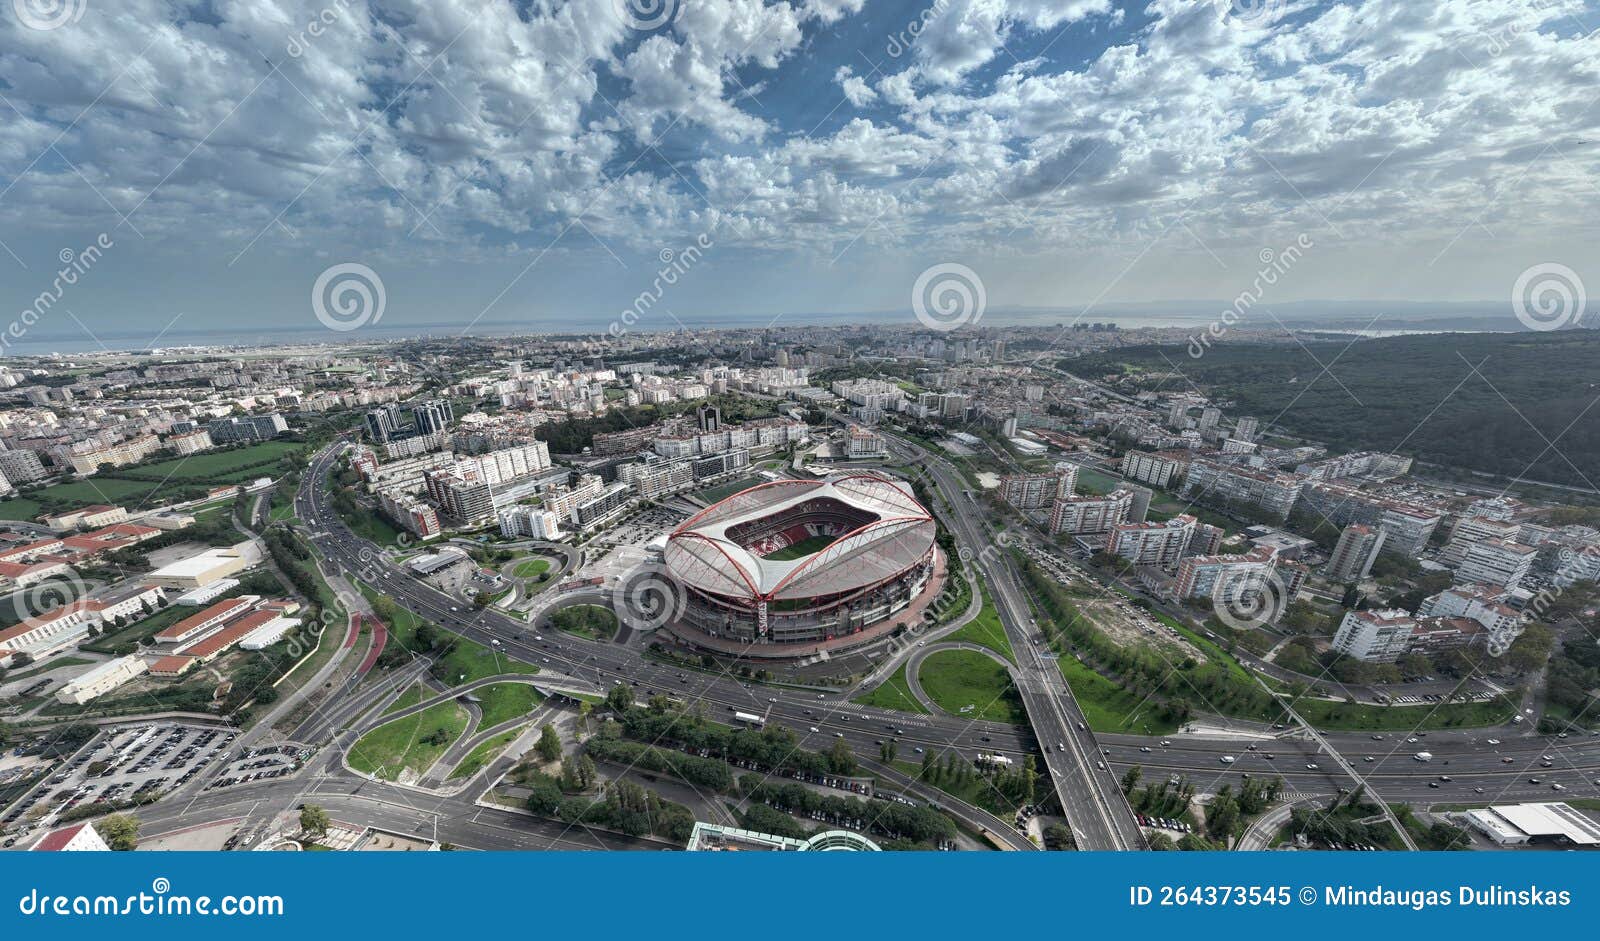 estadio do sport lisboa e benfica. multi-purpose stadium located in lisbon, portugal. drone point of view. football stadium